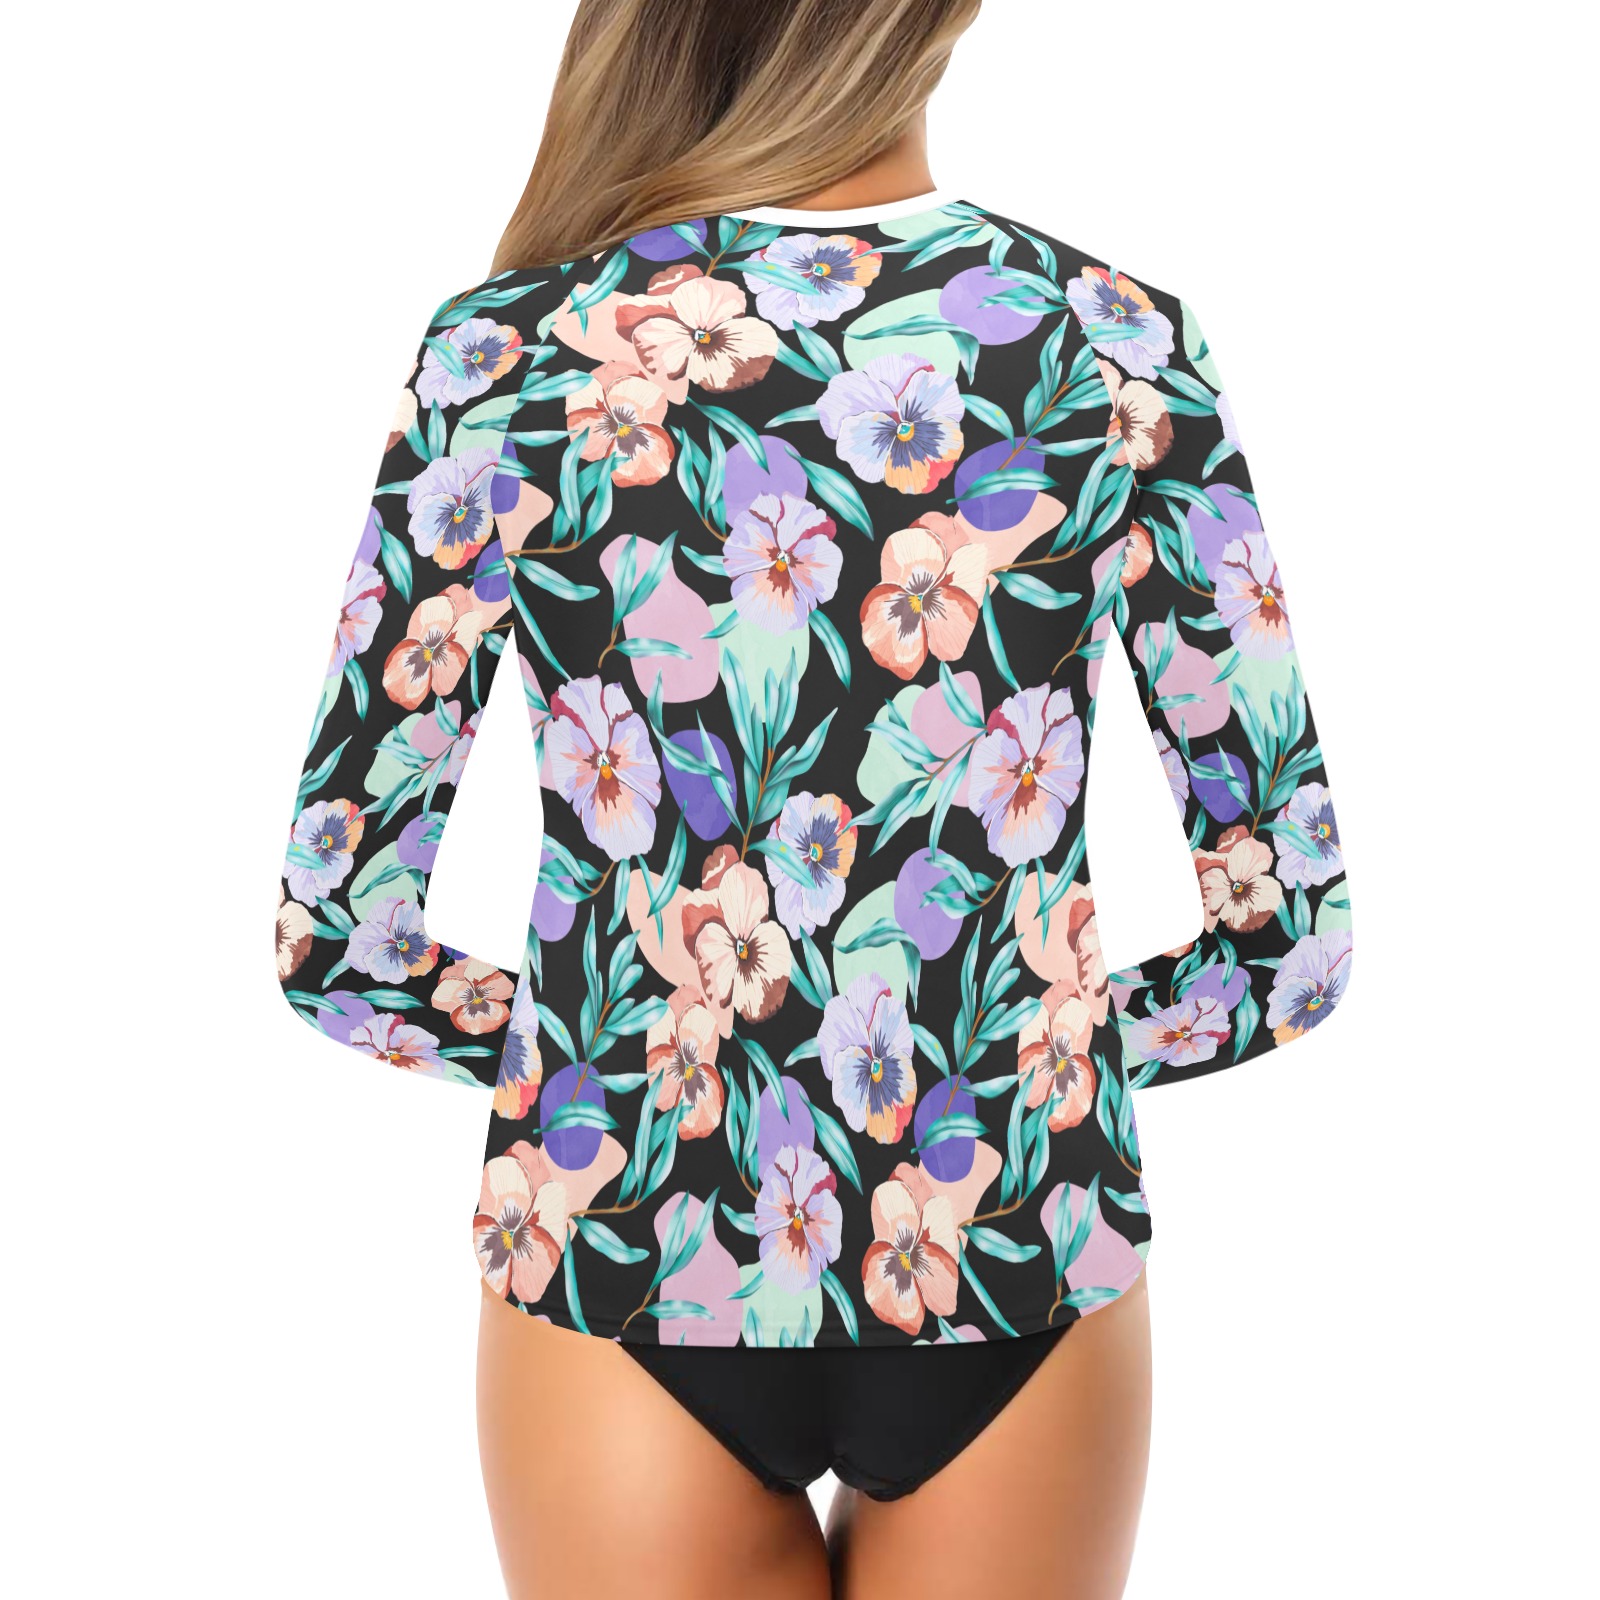 Dark modern tropical floral PD Women's Long Sleeve Swim Shirt (Model S39)